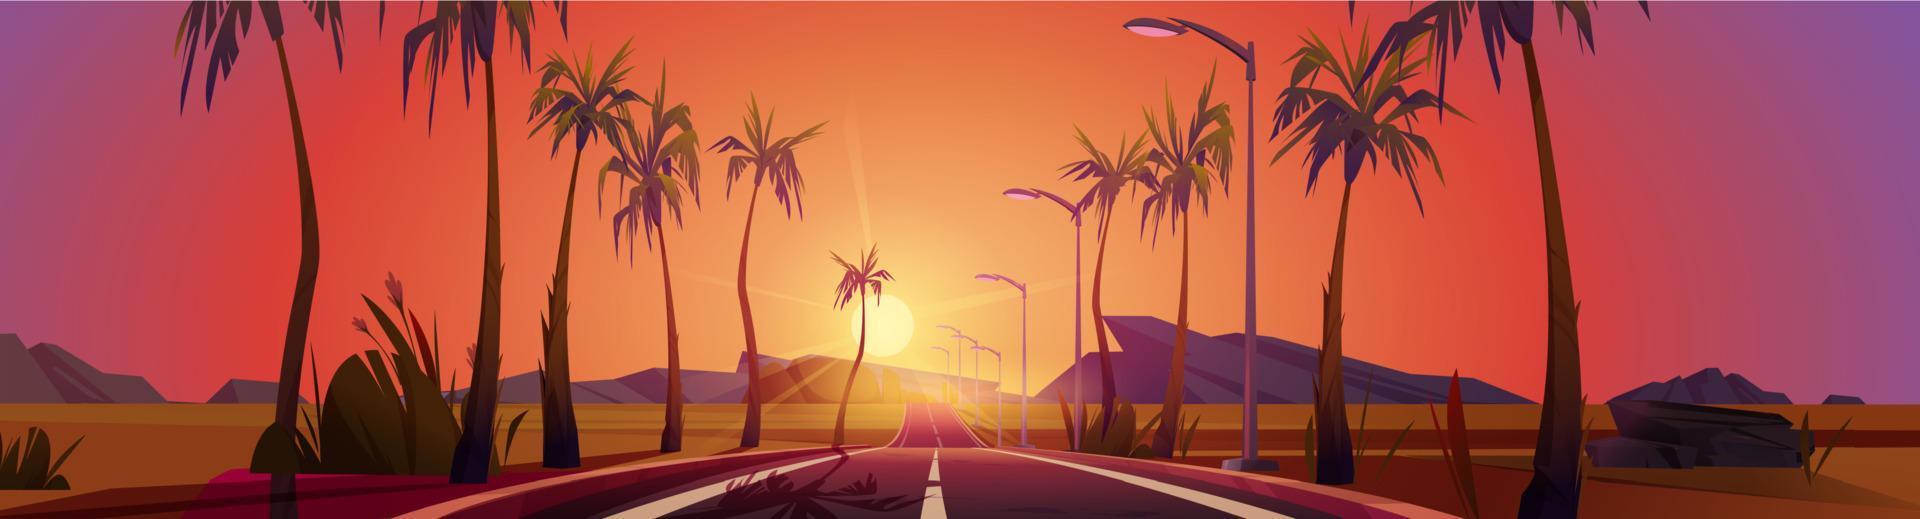 Sonnenuntergang Landschaftsstraße mit Palmen an den Seiten vektor